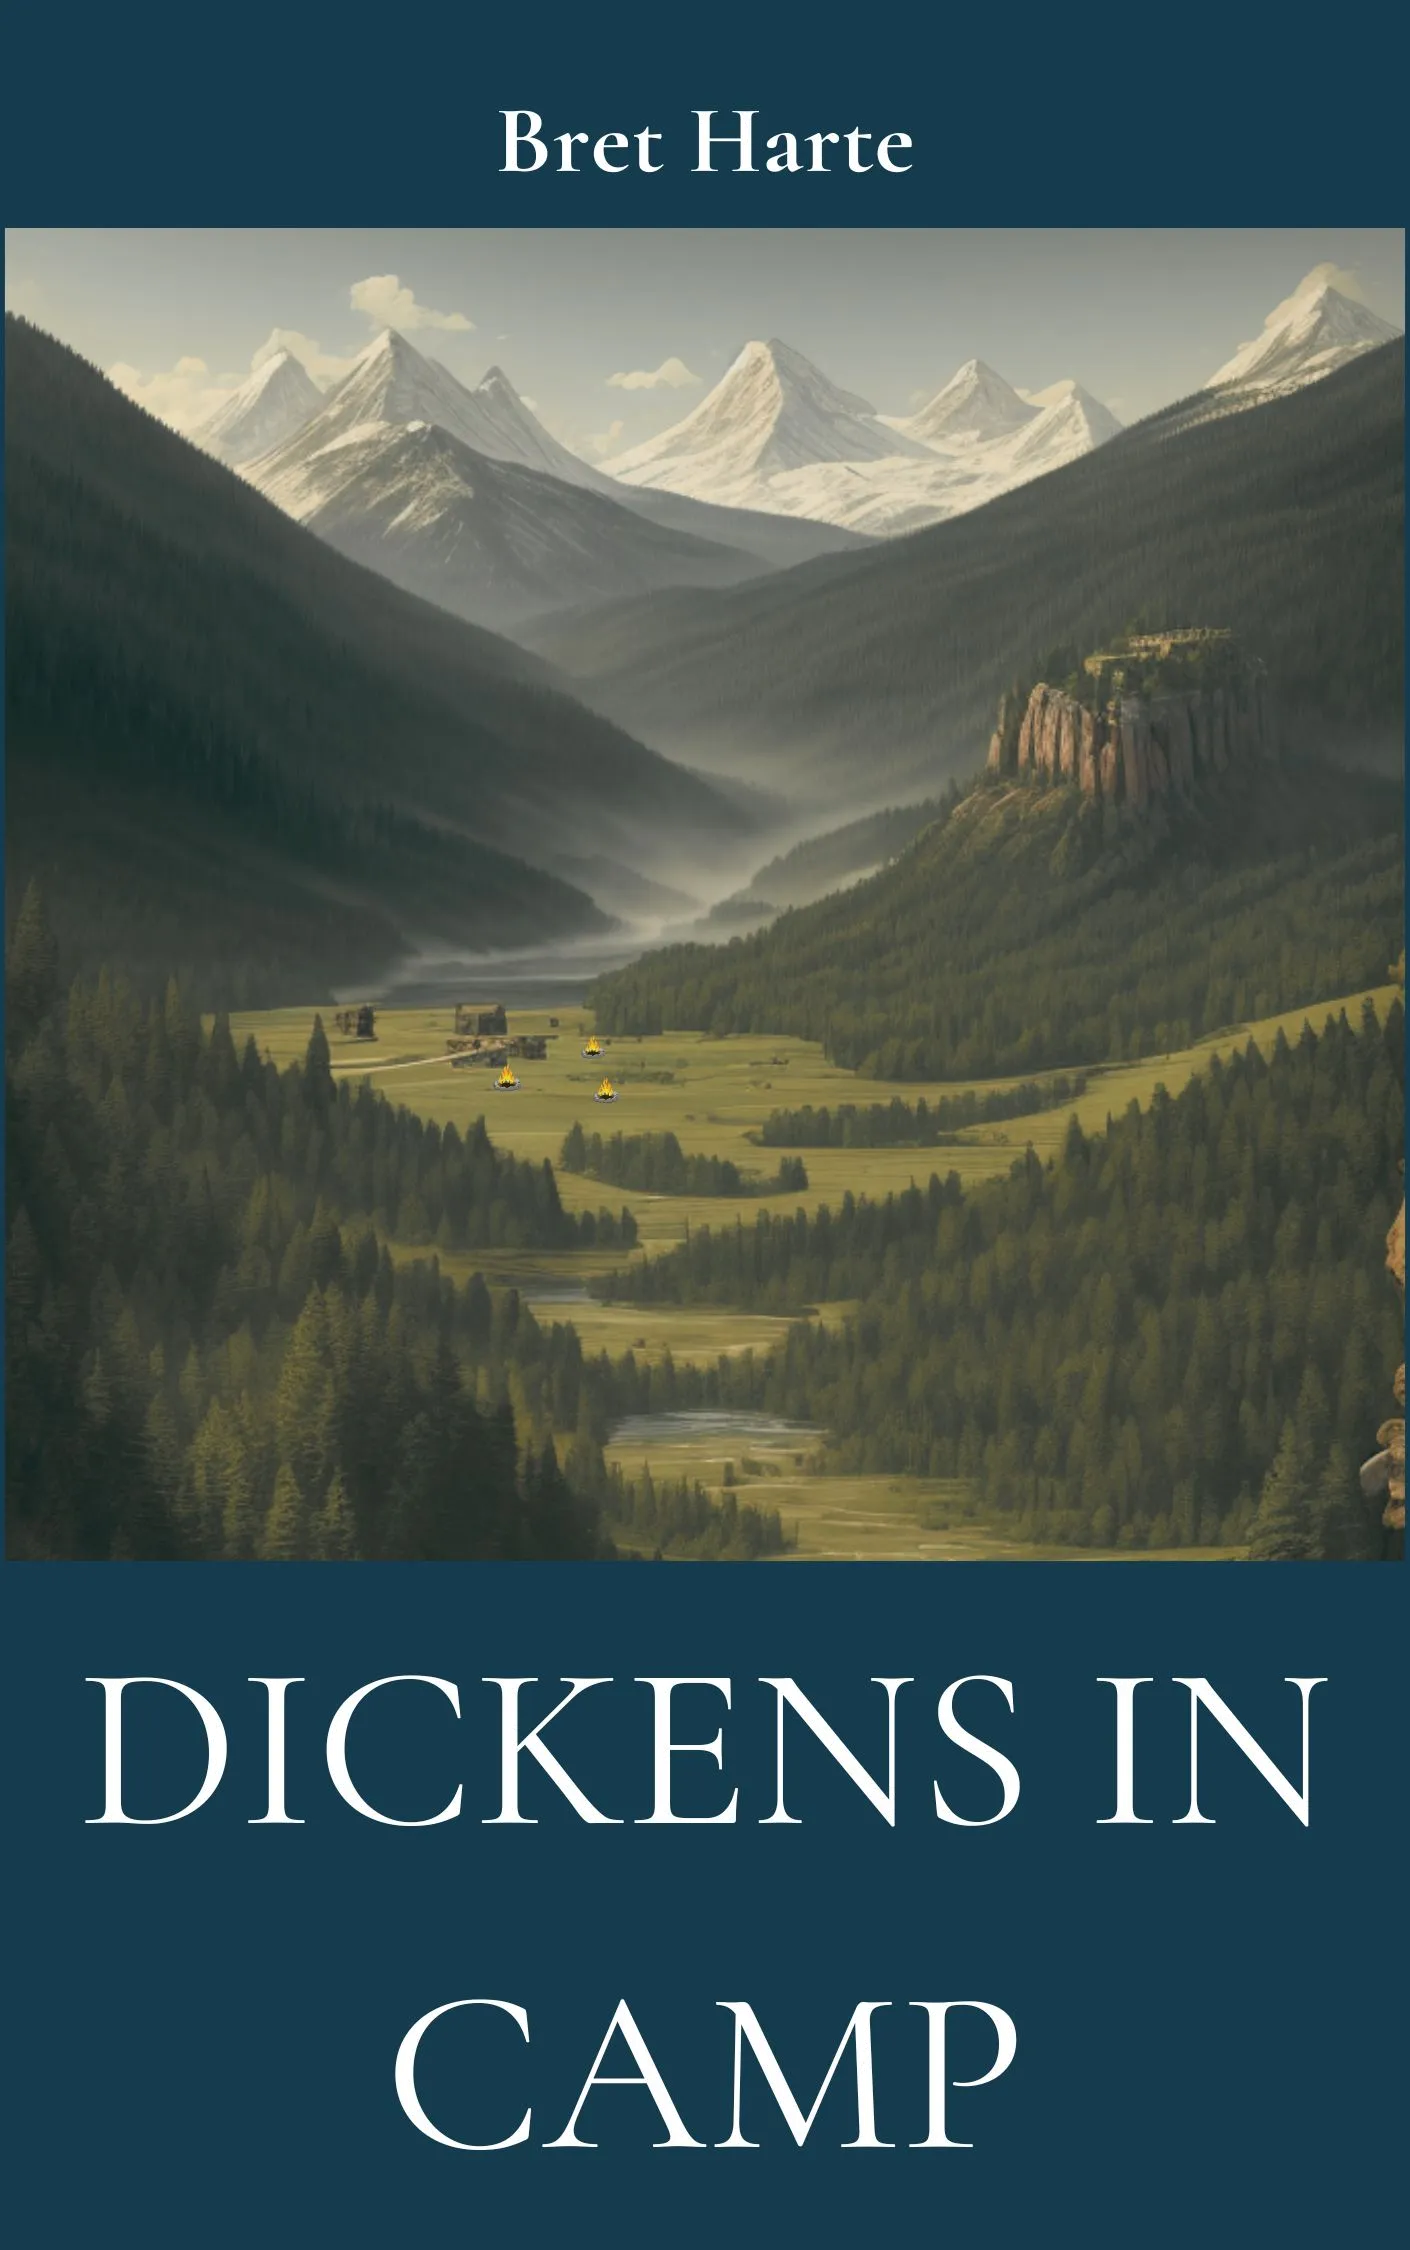 Dickens in Camp by Bret Harte Audiobook